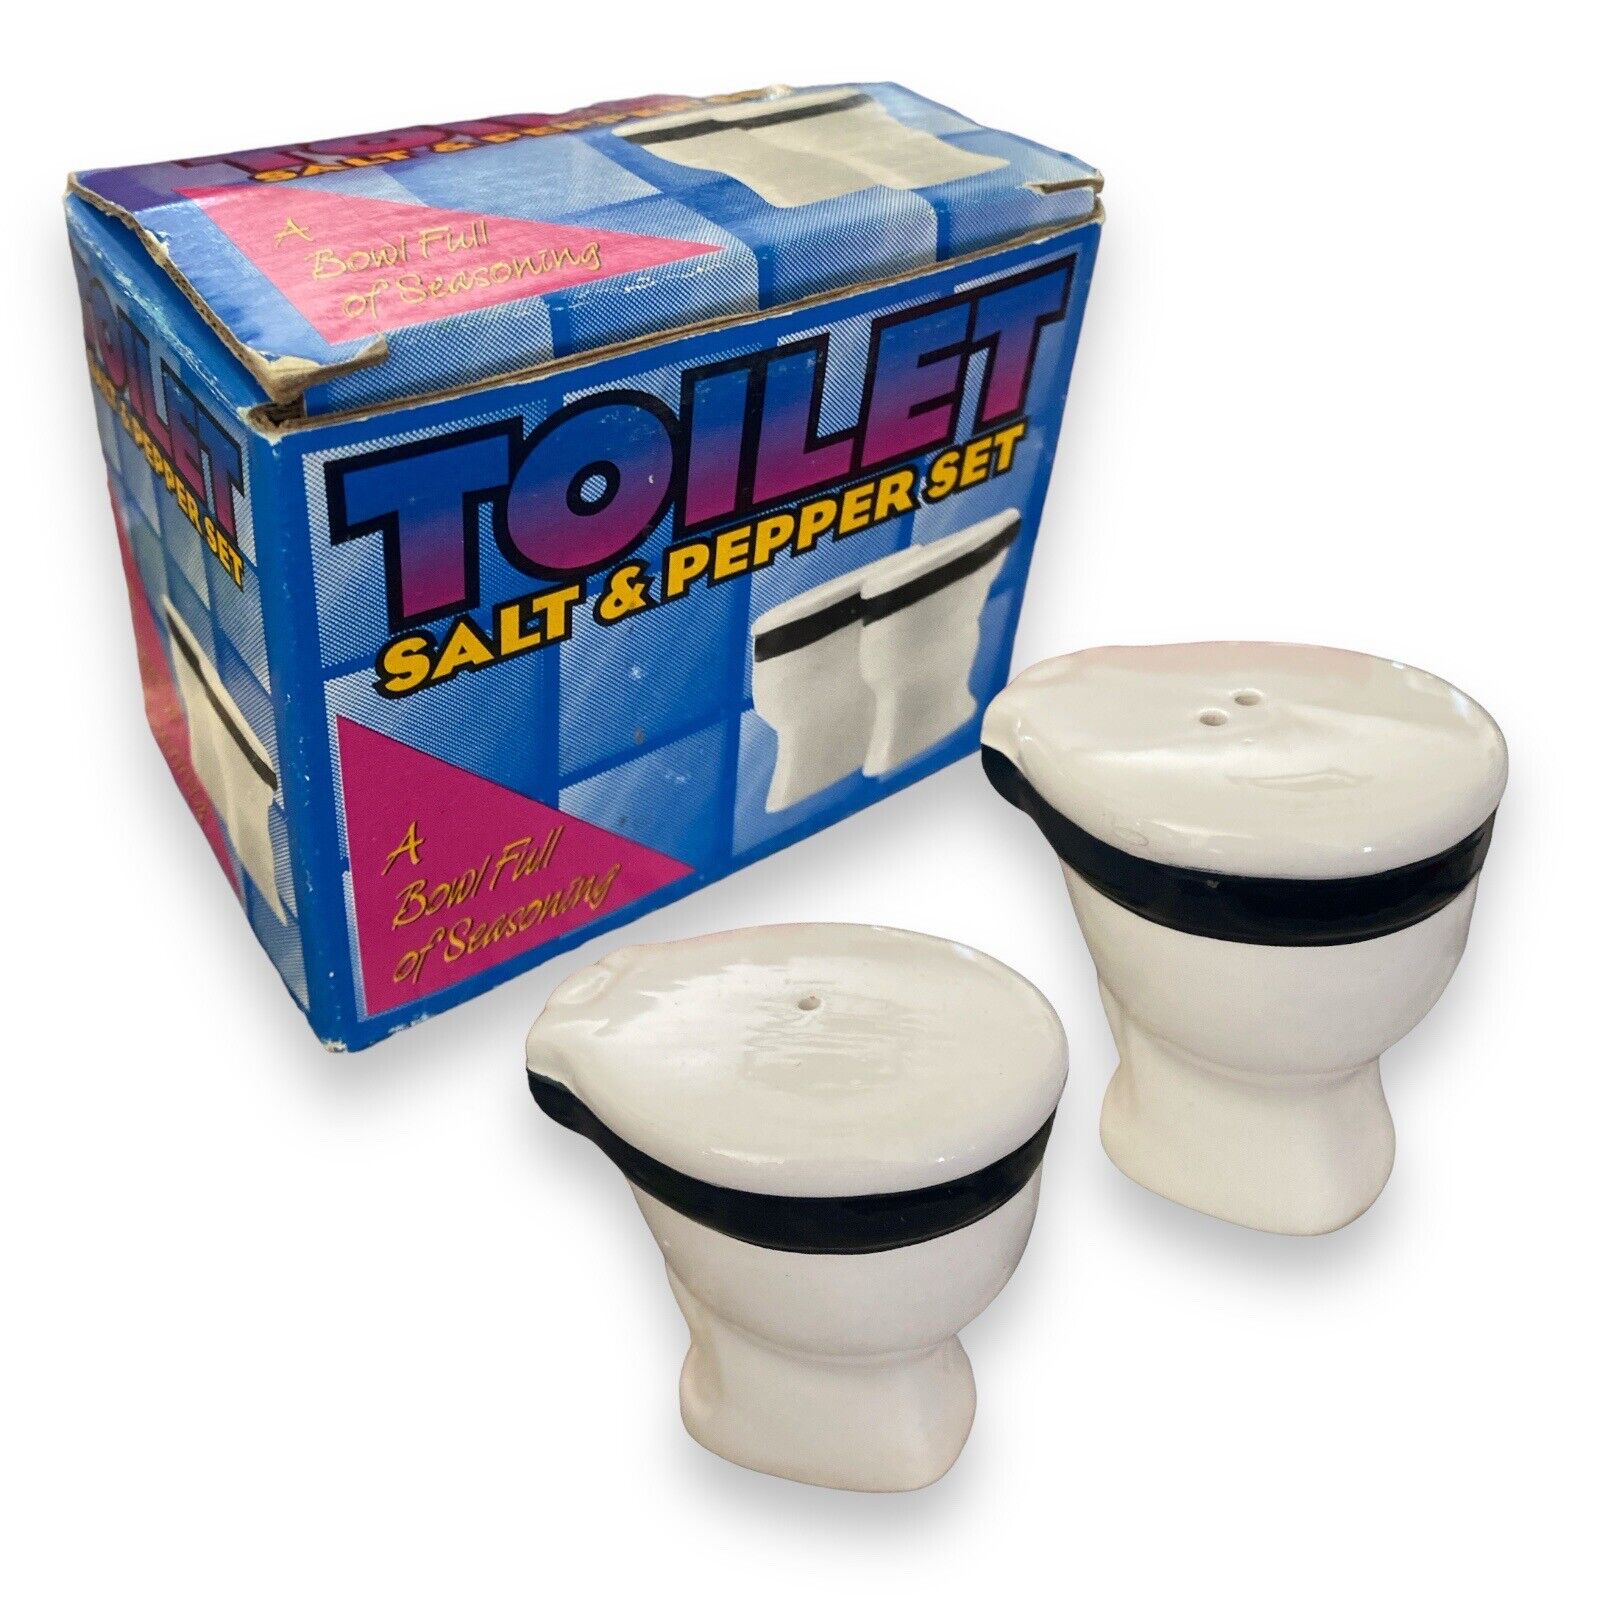 Vintage 1995 Toilet Shaped Novelty Ceramic Salt and Pepper Shakers MATSCOT